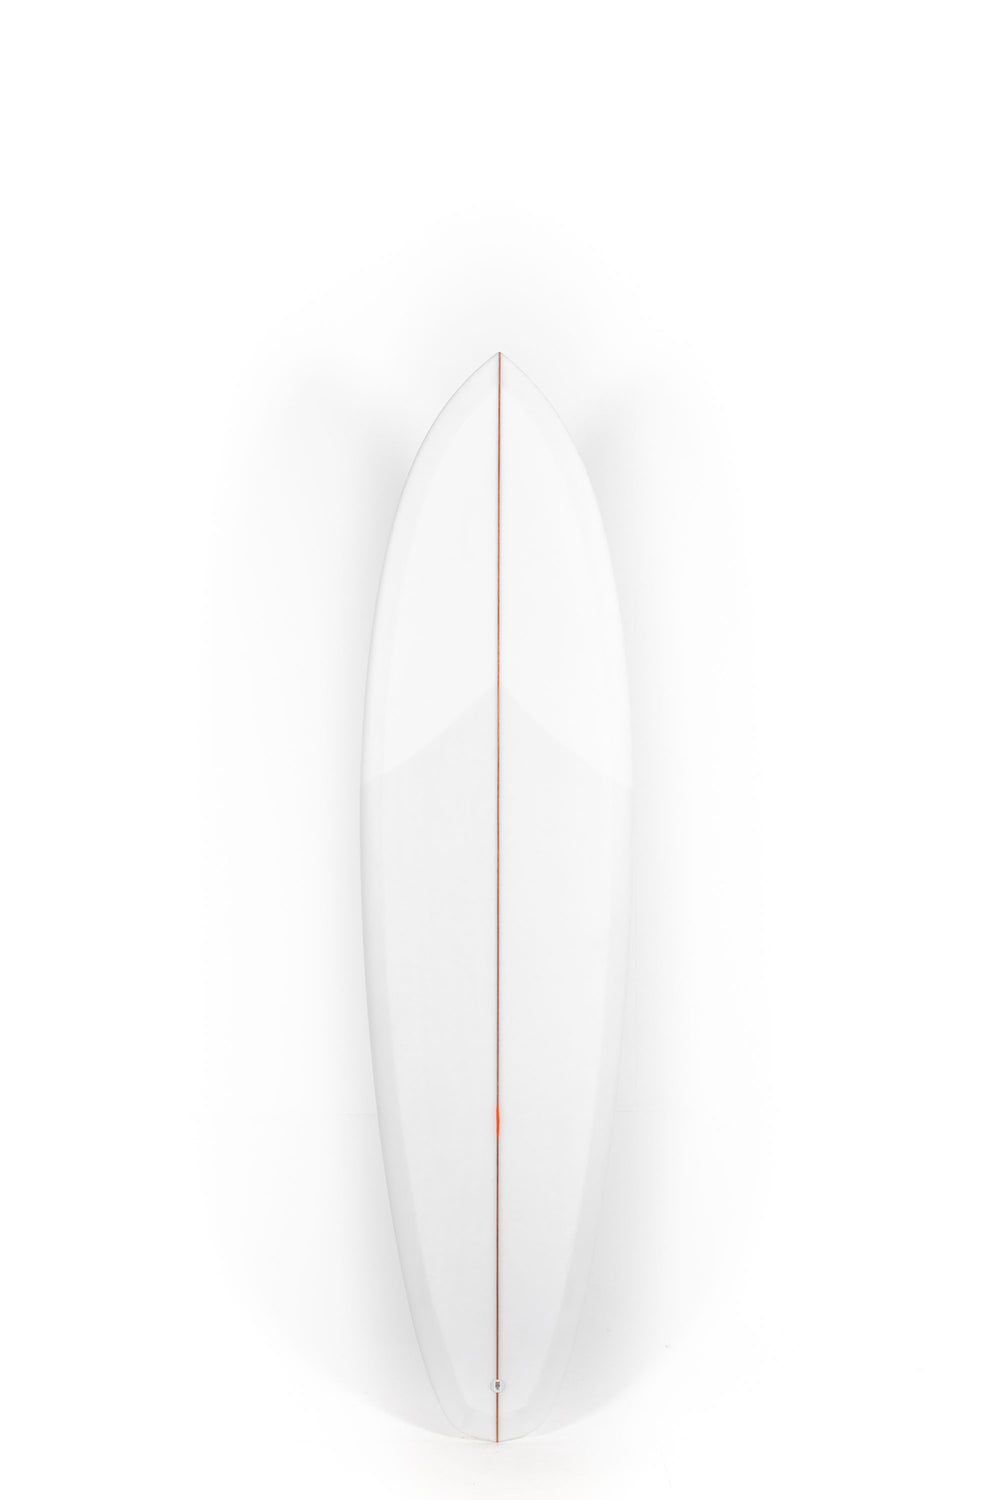 Pukas Surf Shop Christenson Surfboards - ULTRA TRACKER TWIN - 7'0